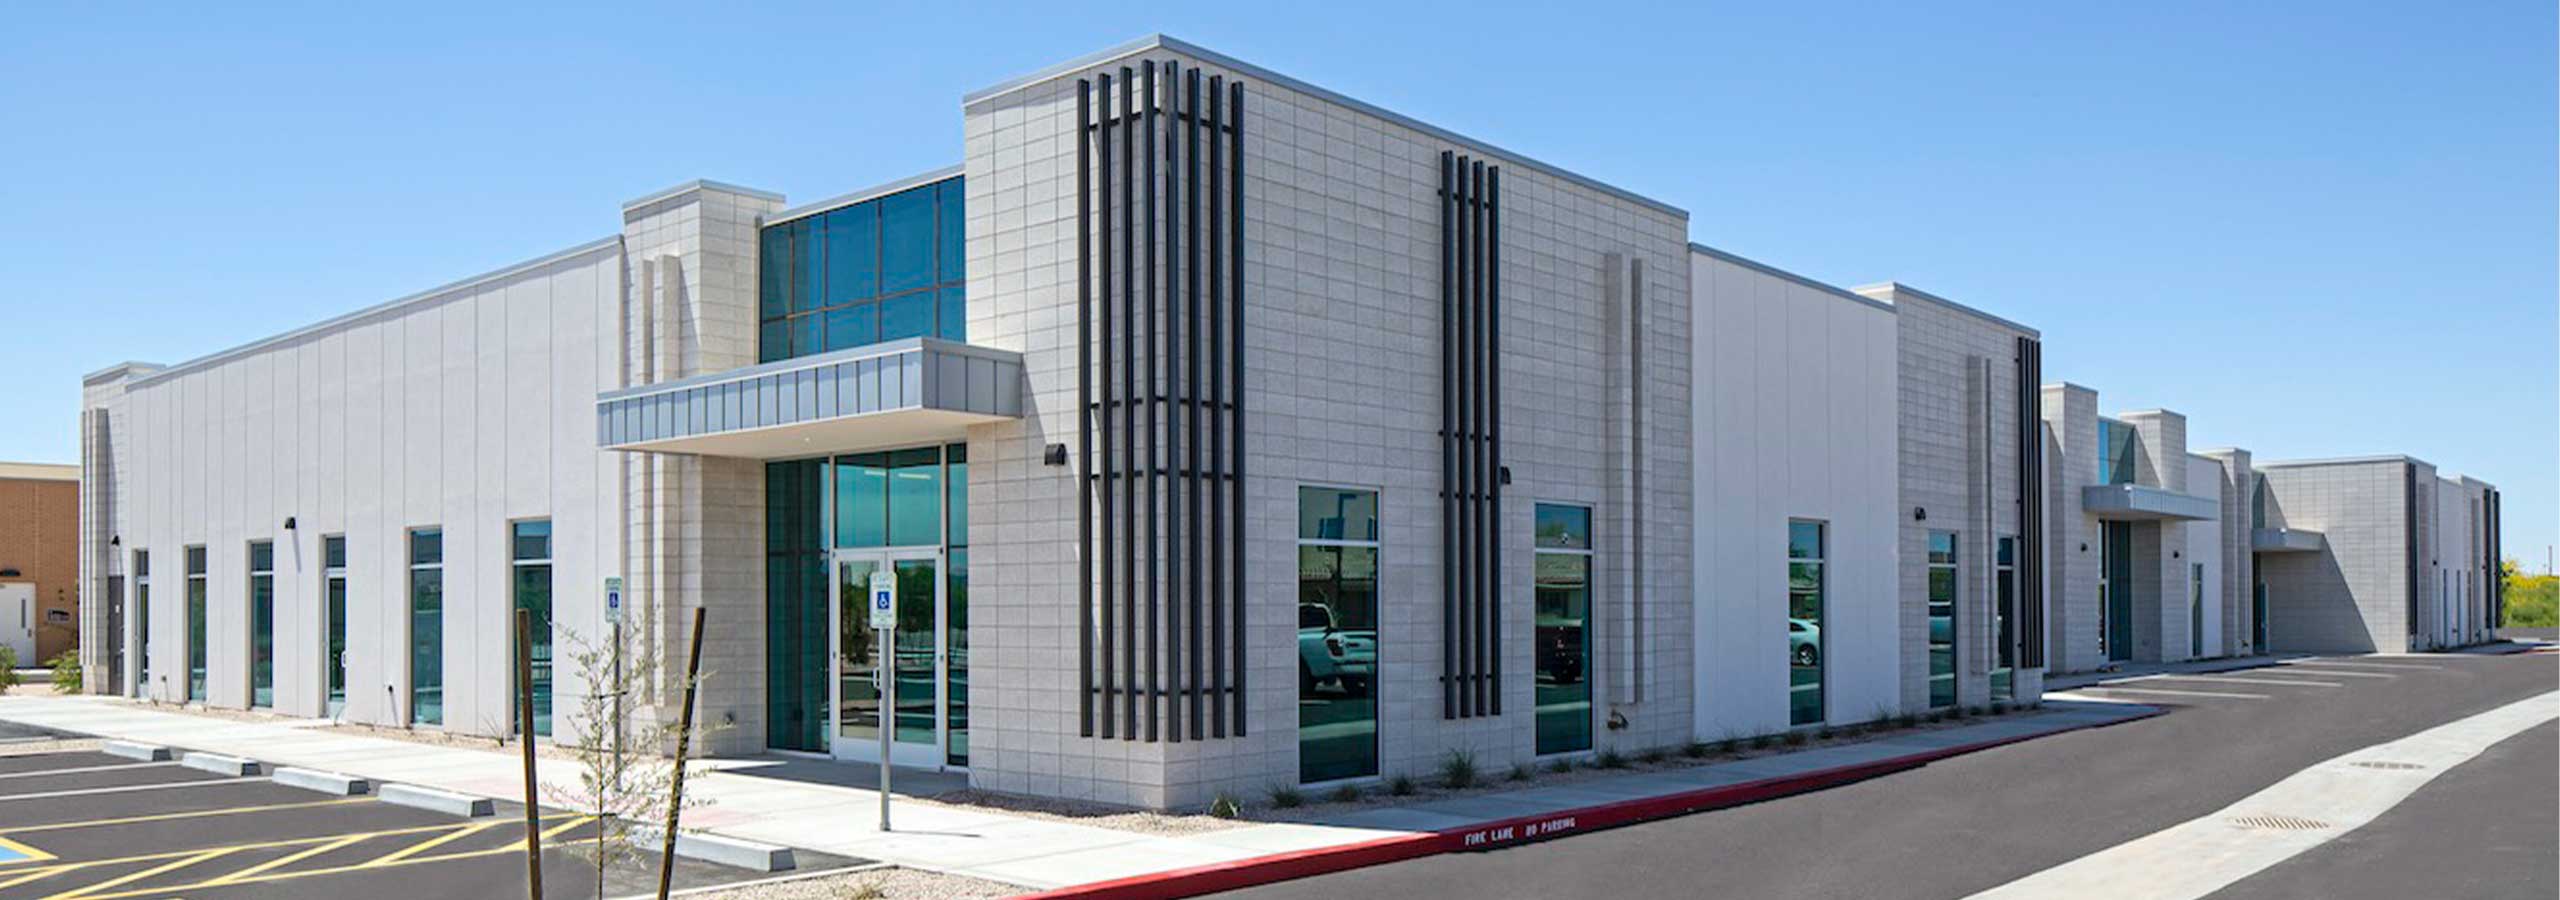 Gilbert Medical Office Building